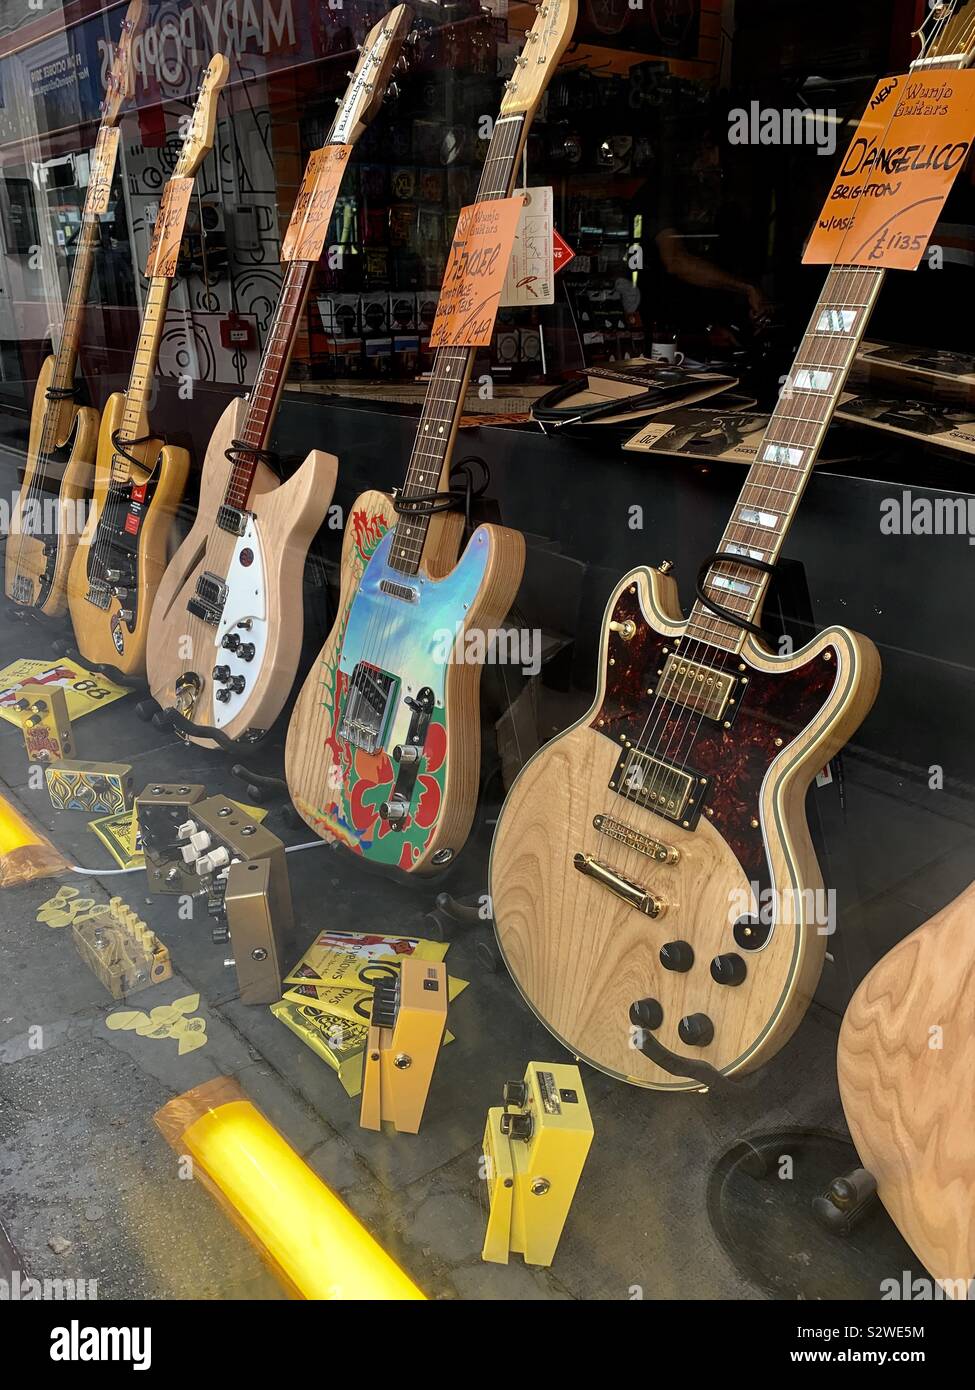 London, UK - 21 August 2019: Electric guitars for sale in a shop window in Denmark Street. Stock Photo